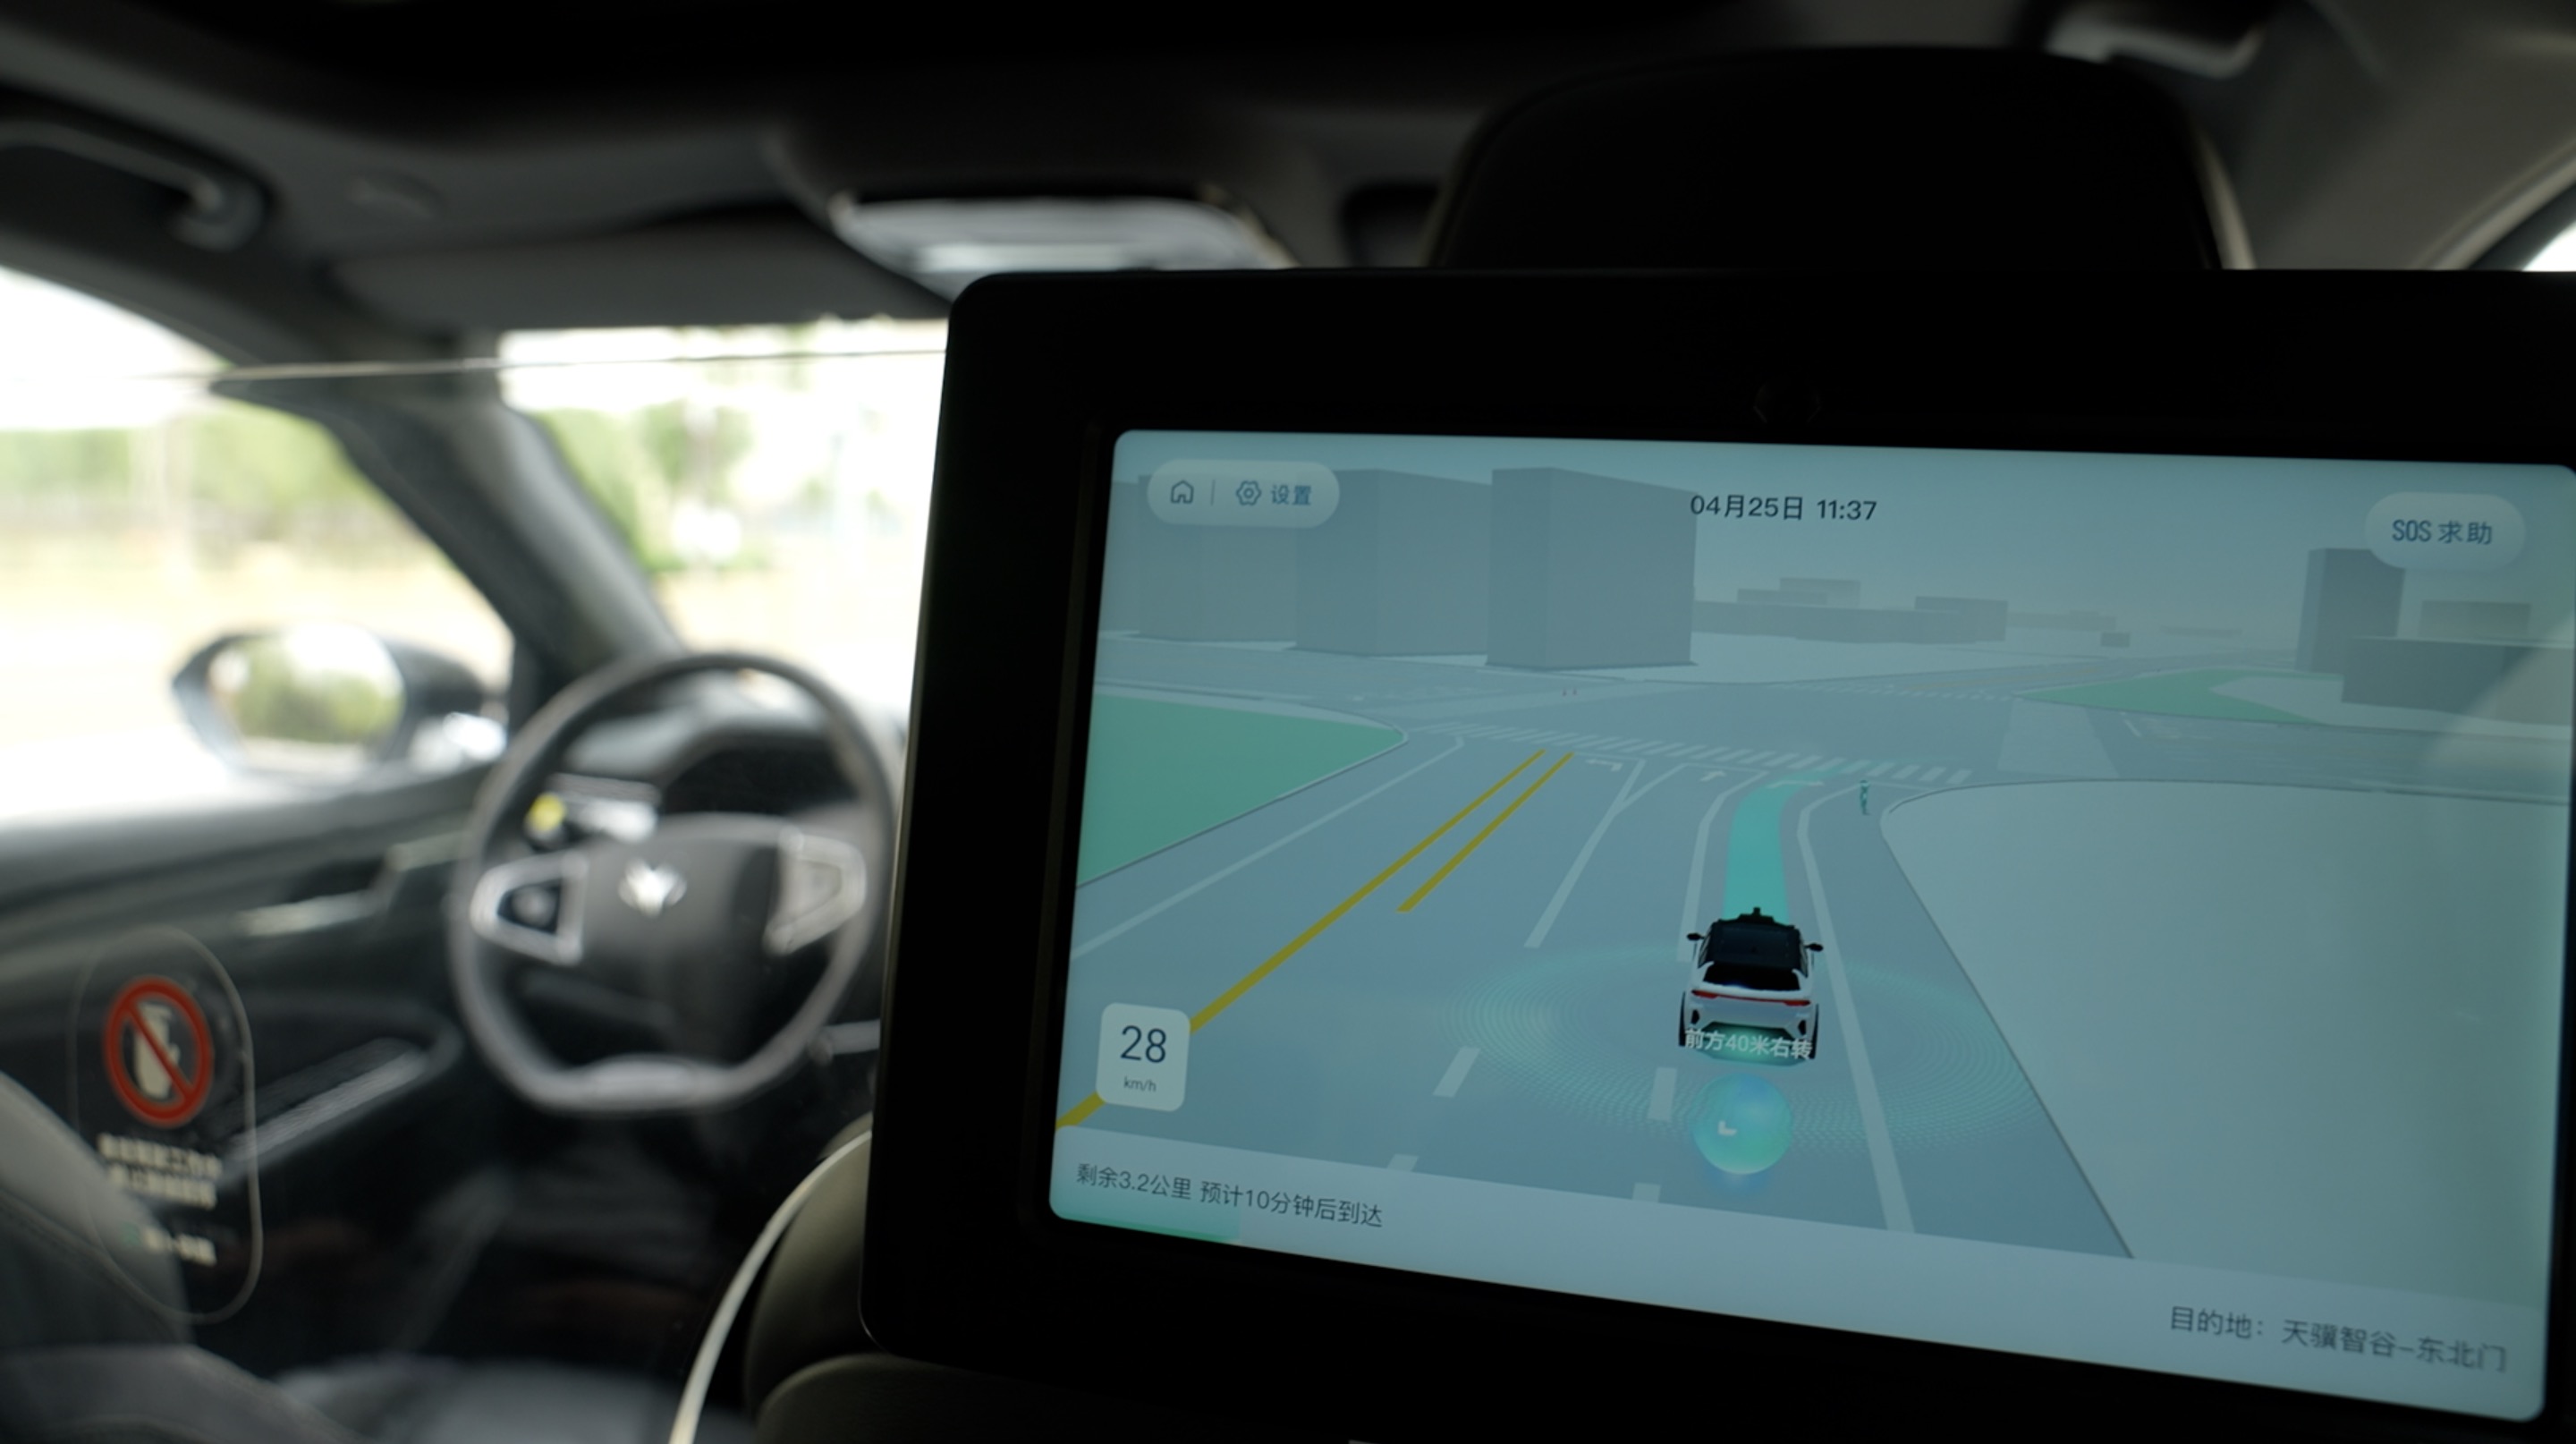  BizFocus: When can autopilot completely 'drive' our vehicles?